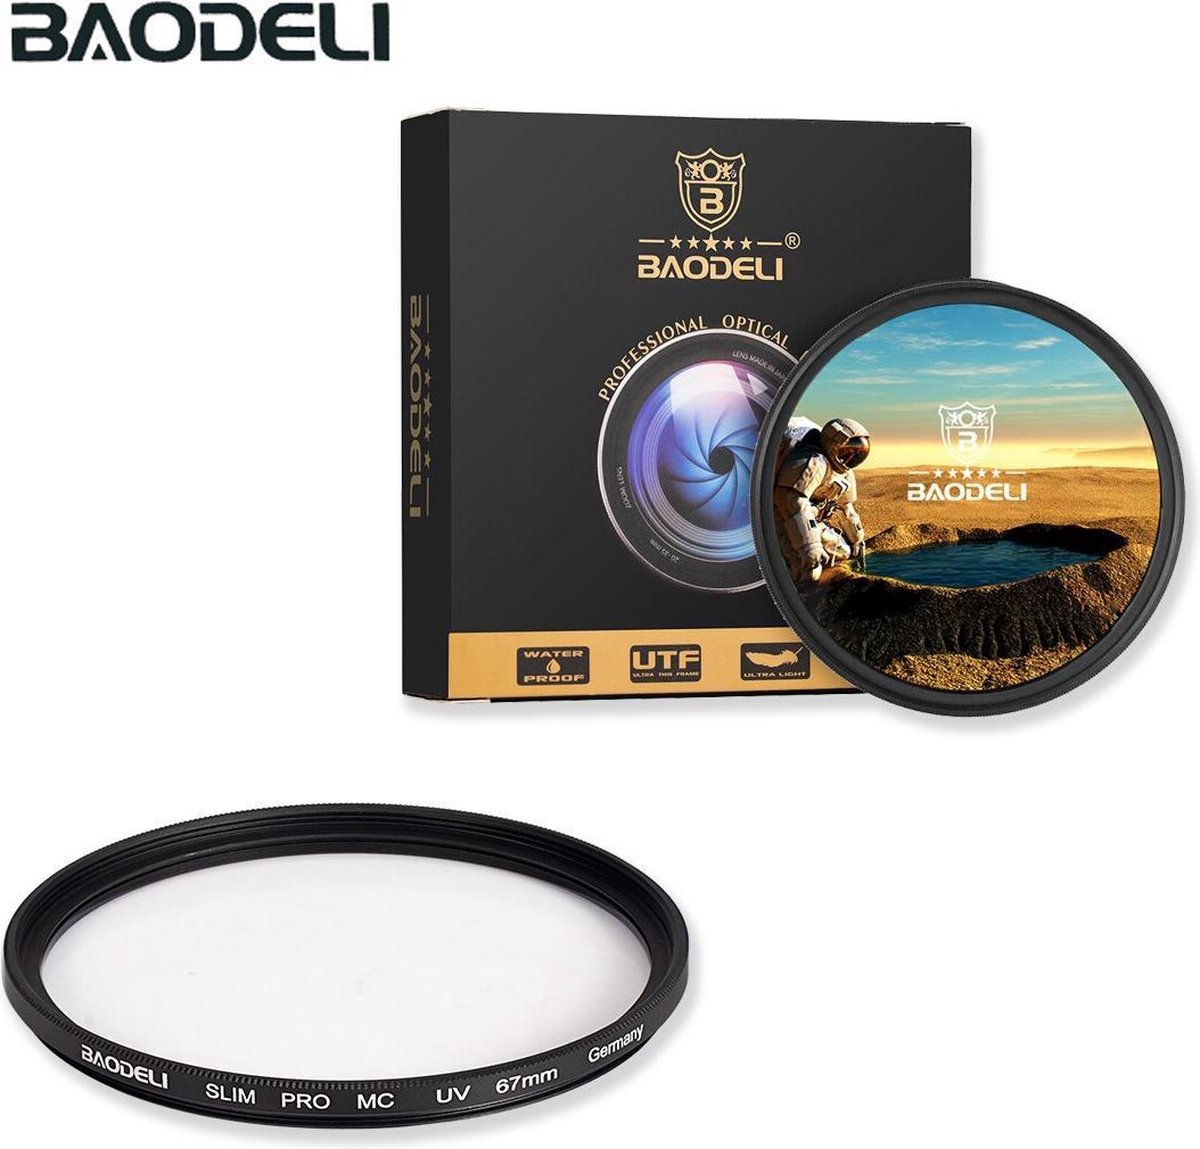 Baodeli 67mm UV filter MC slim Pro